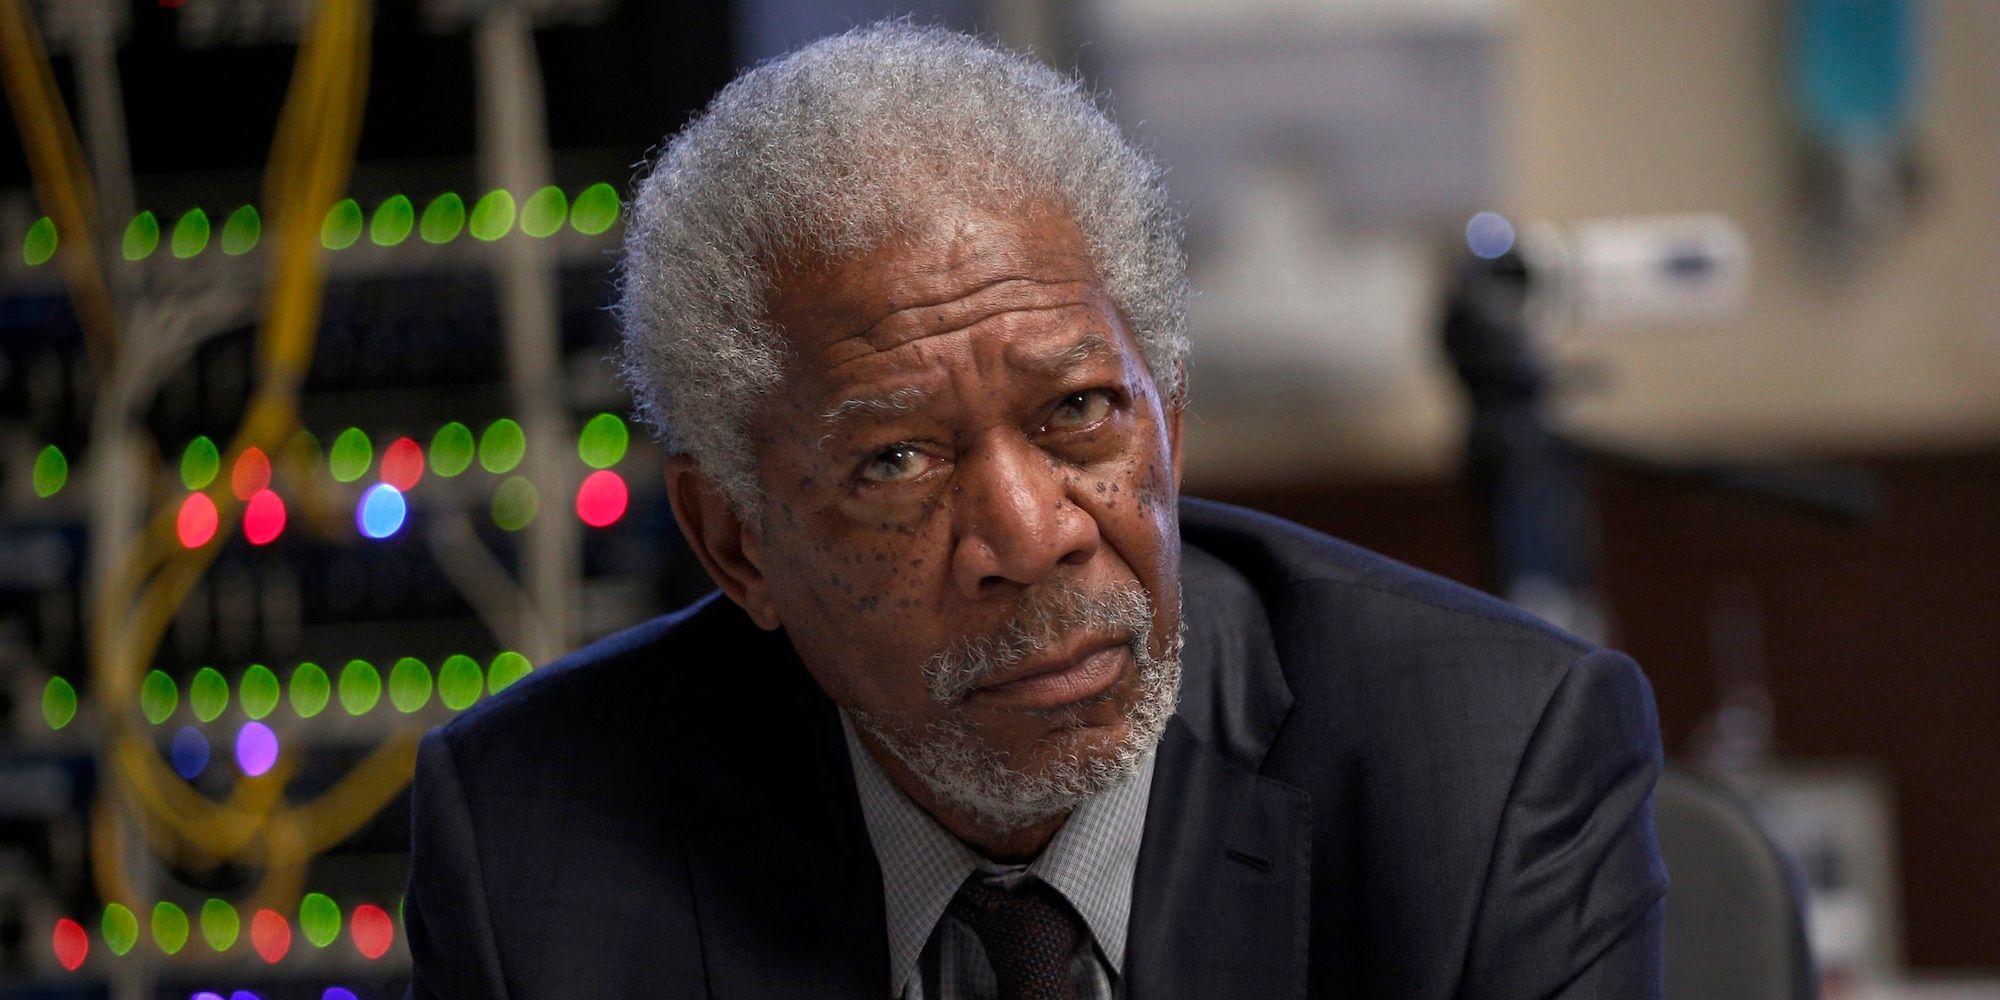 Morgan Freeman looks up